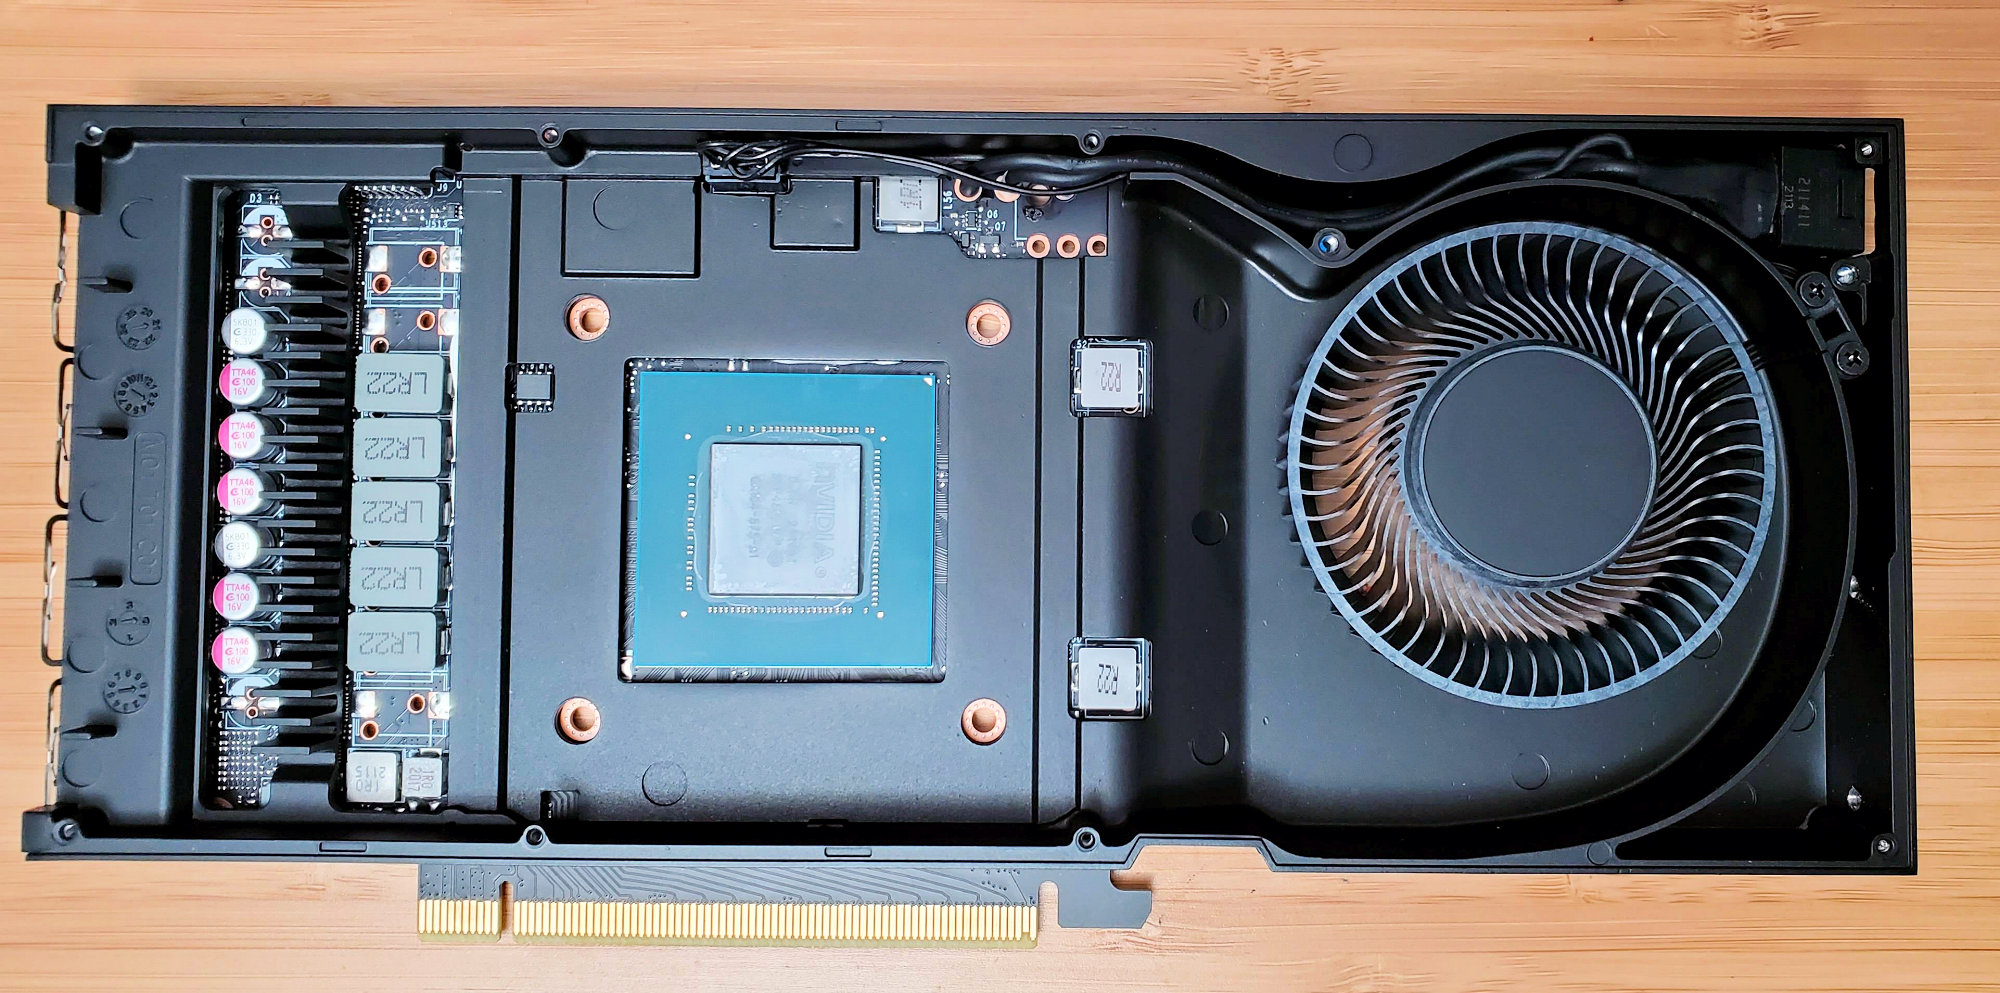 NVIDIA RTX A4000 workstation blower card with GA104-875 GPU has